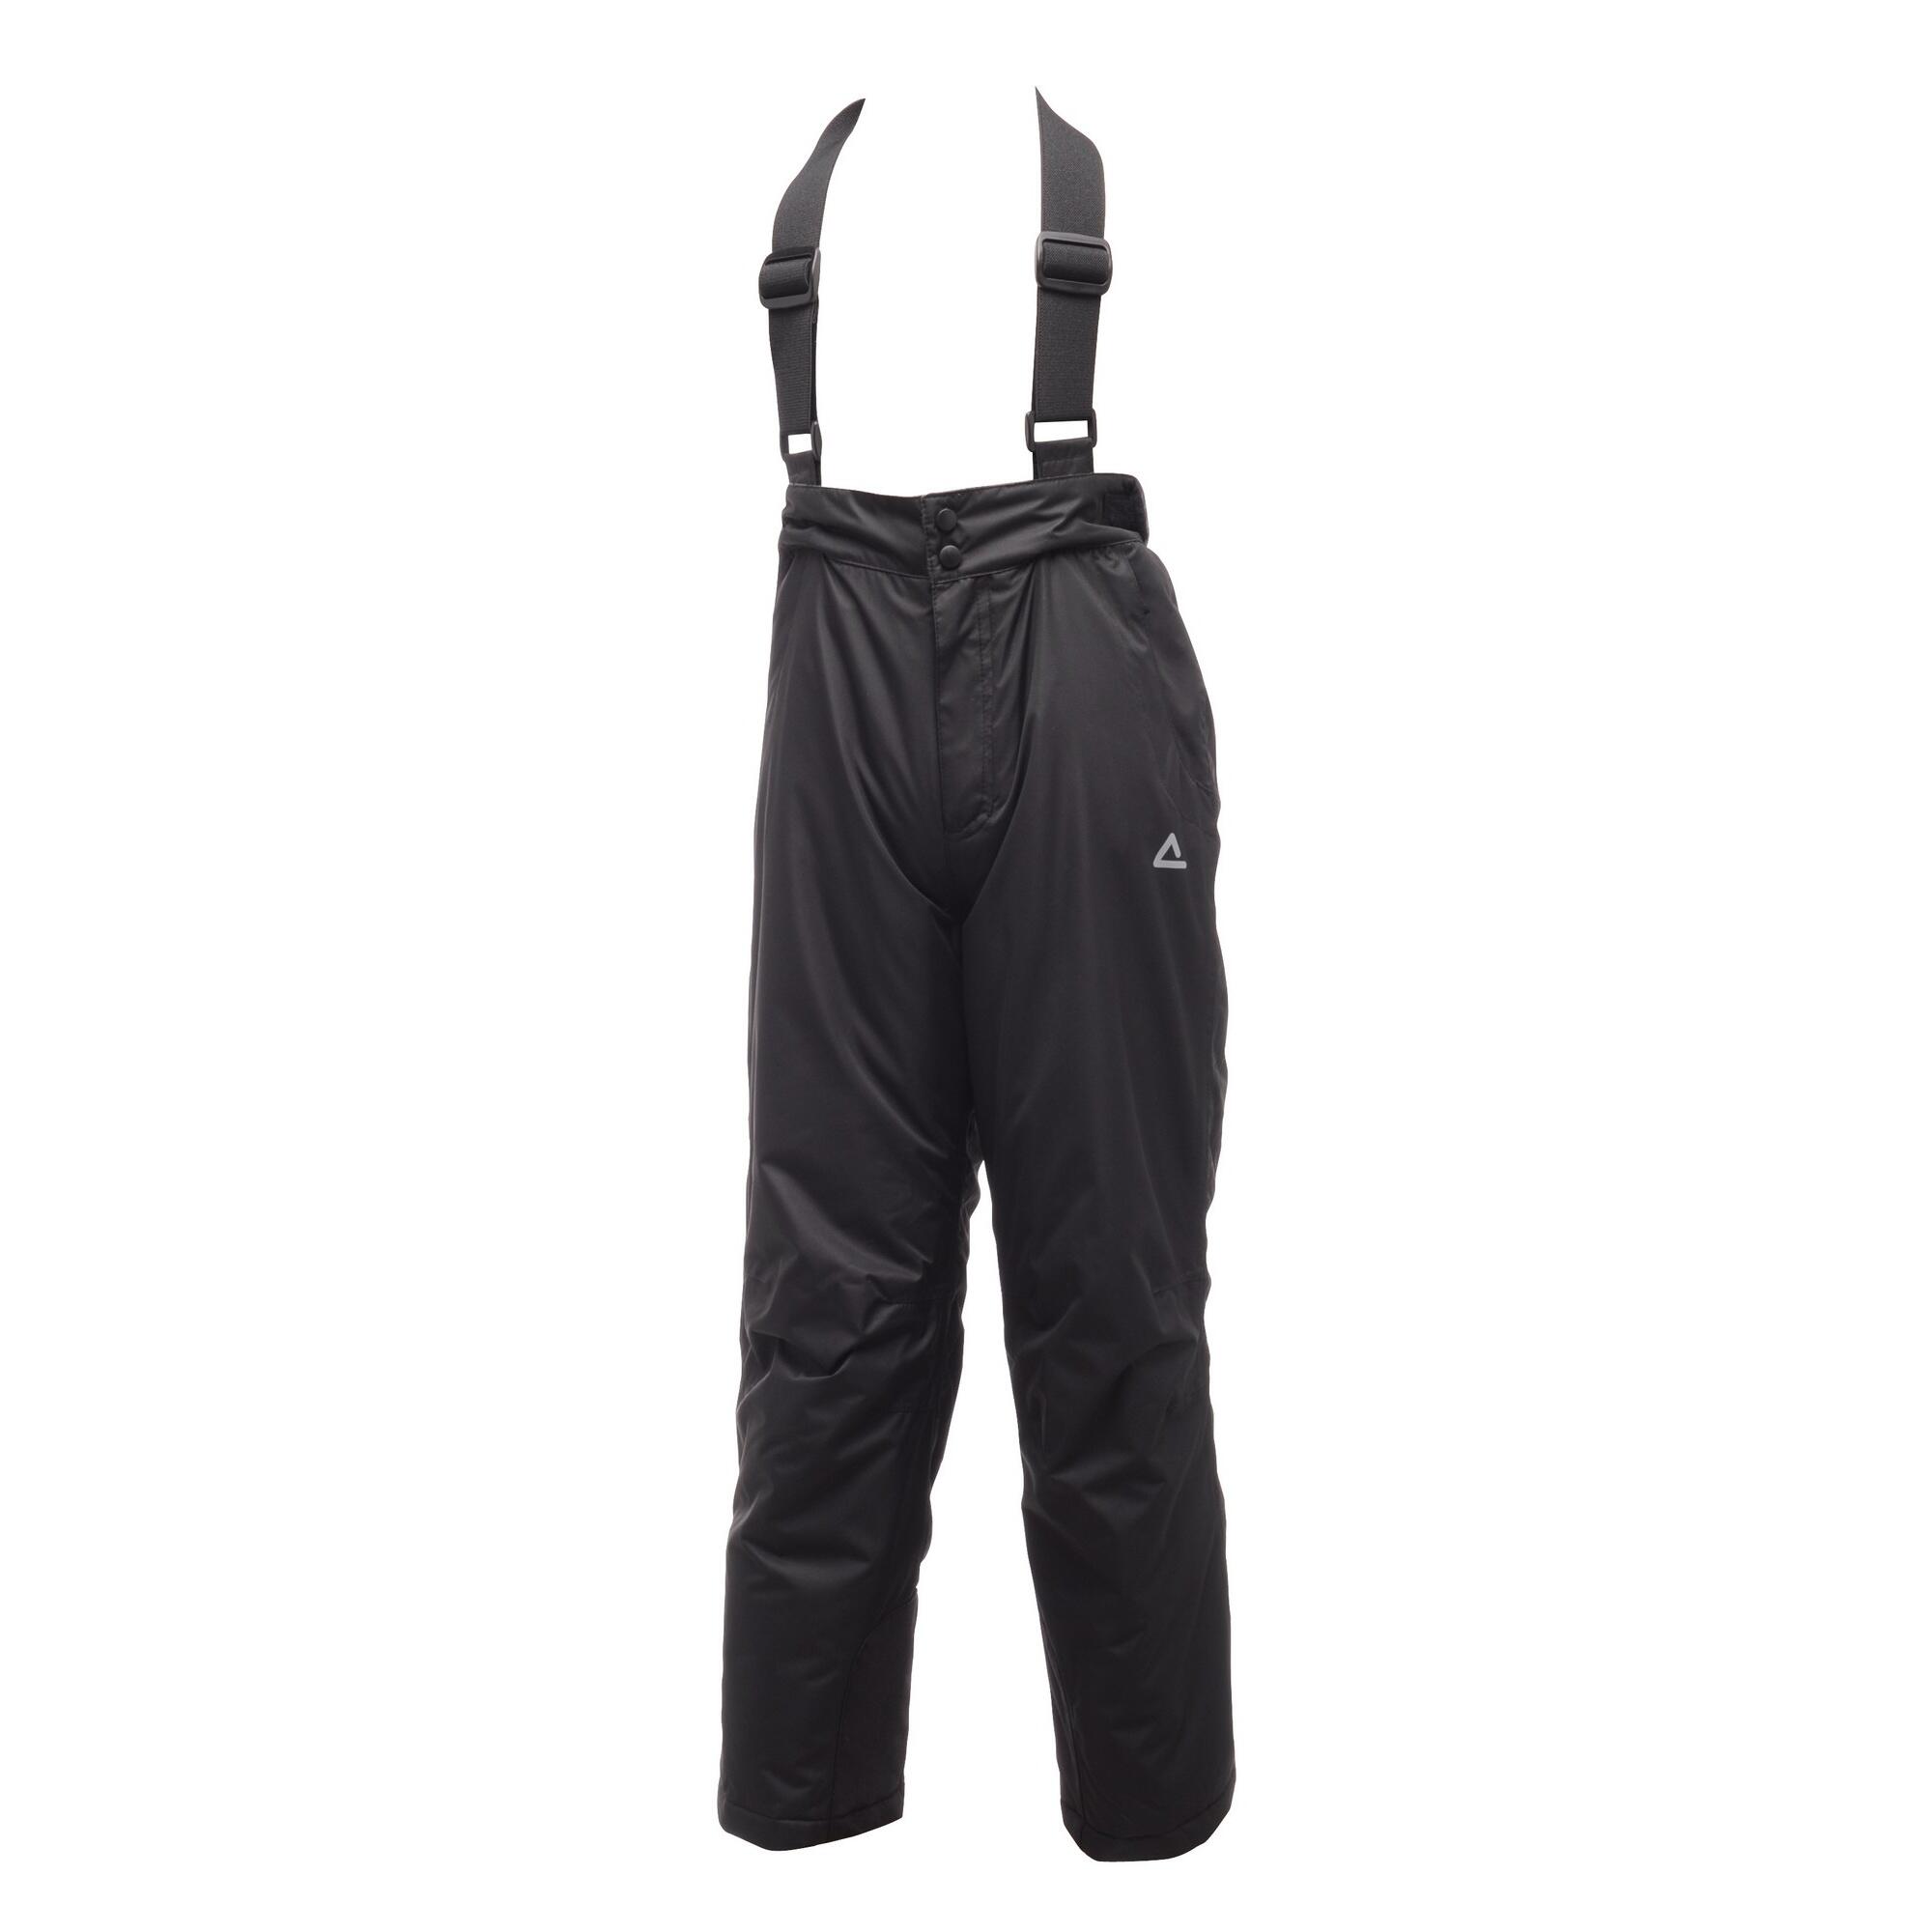 Childrens/Kids Turn About Waterproof Ski Trousers (Black) 2/3